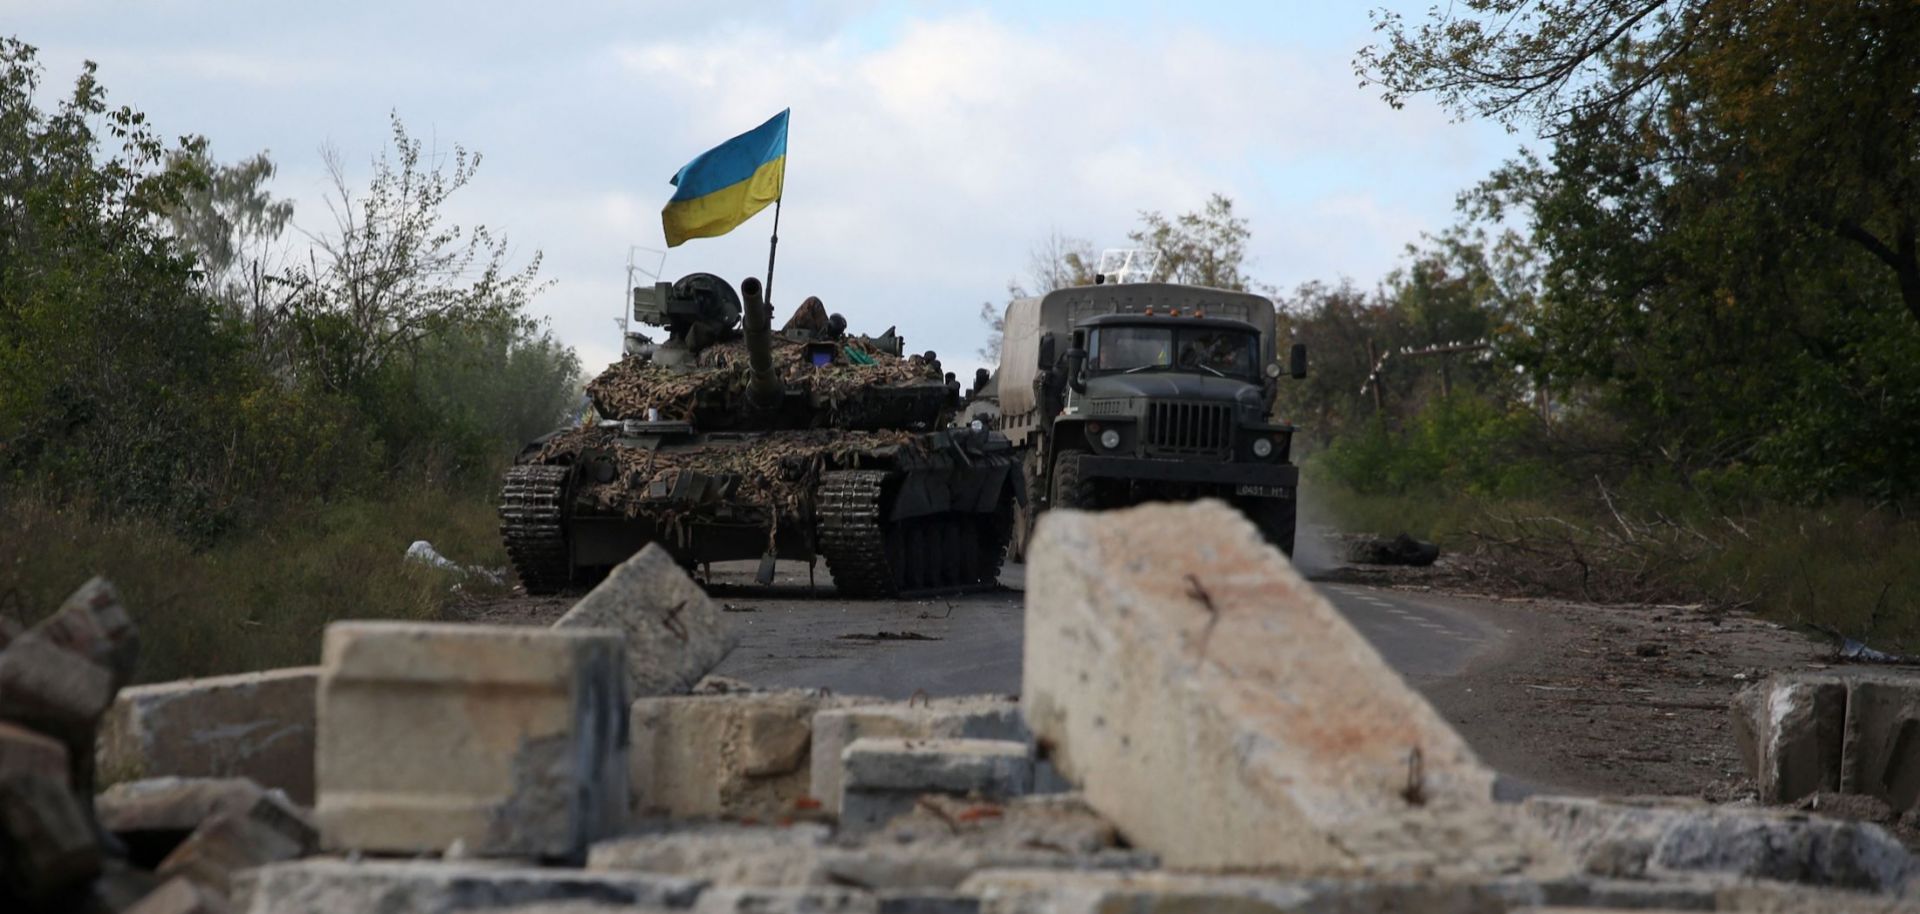 A Ukrainian tank on the road near the recently released Dolyna village in Ukraine's Donetsk region on Sept. 22, 2022.